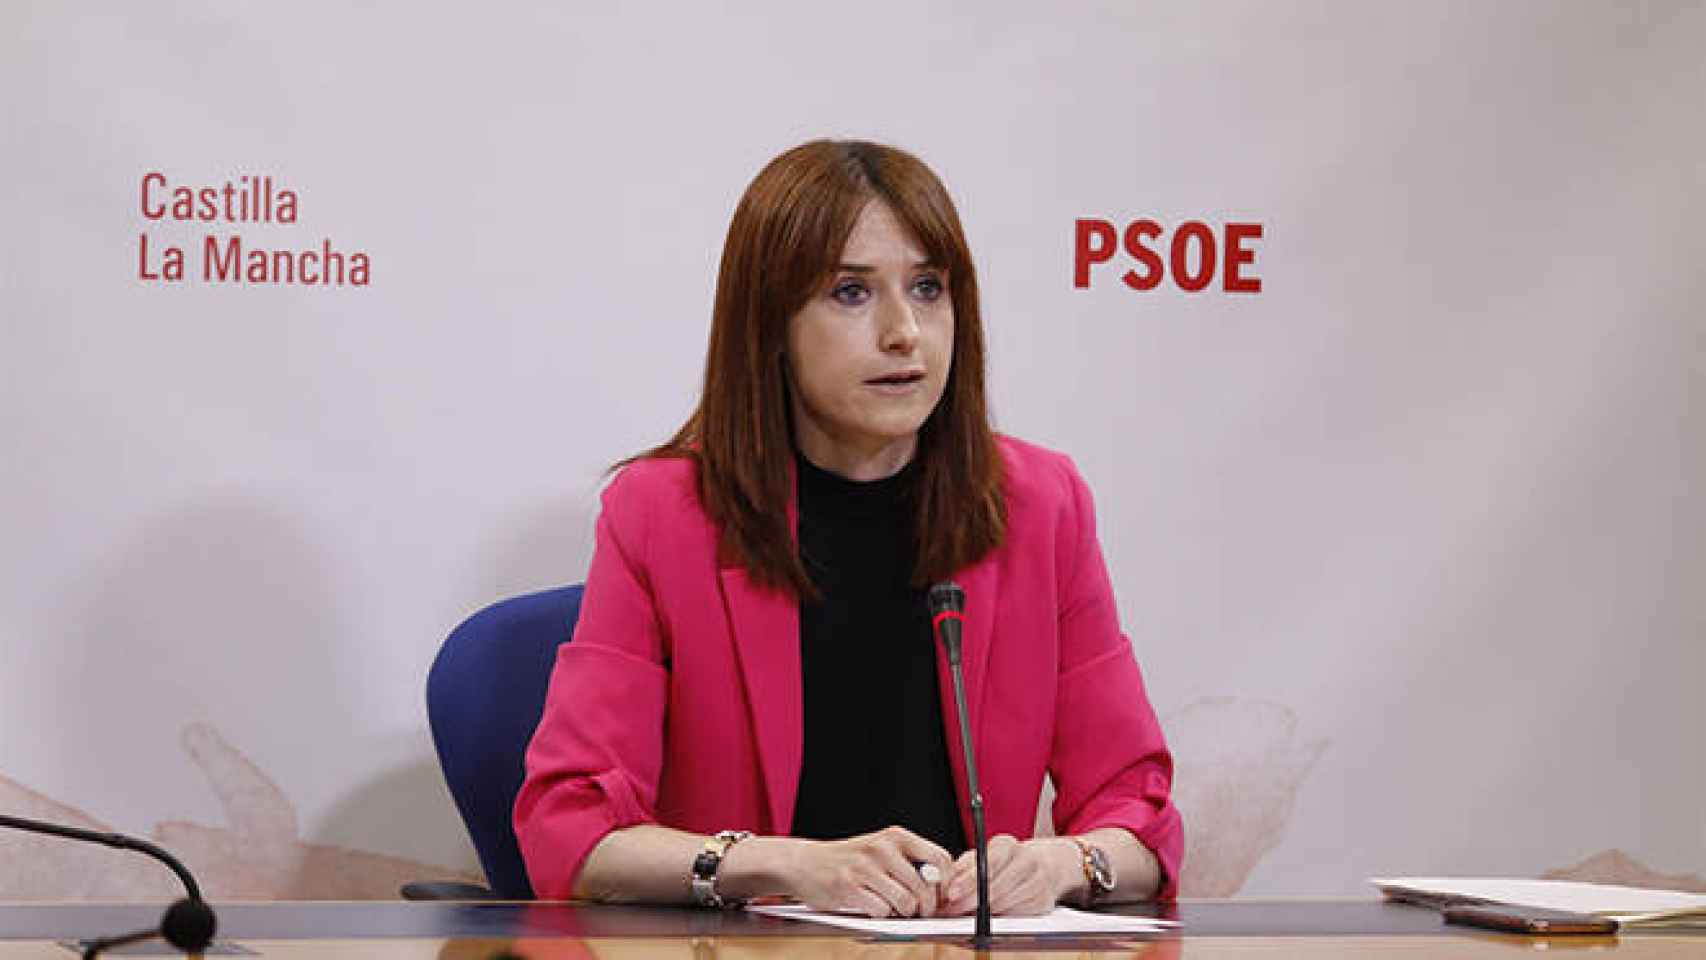 FOTO: Diana López (PSOE)